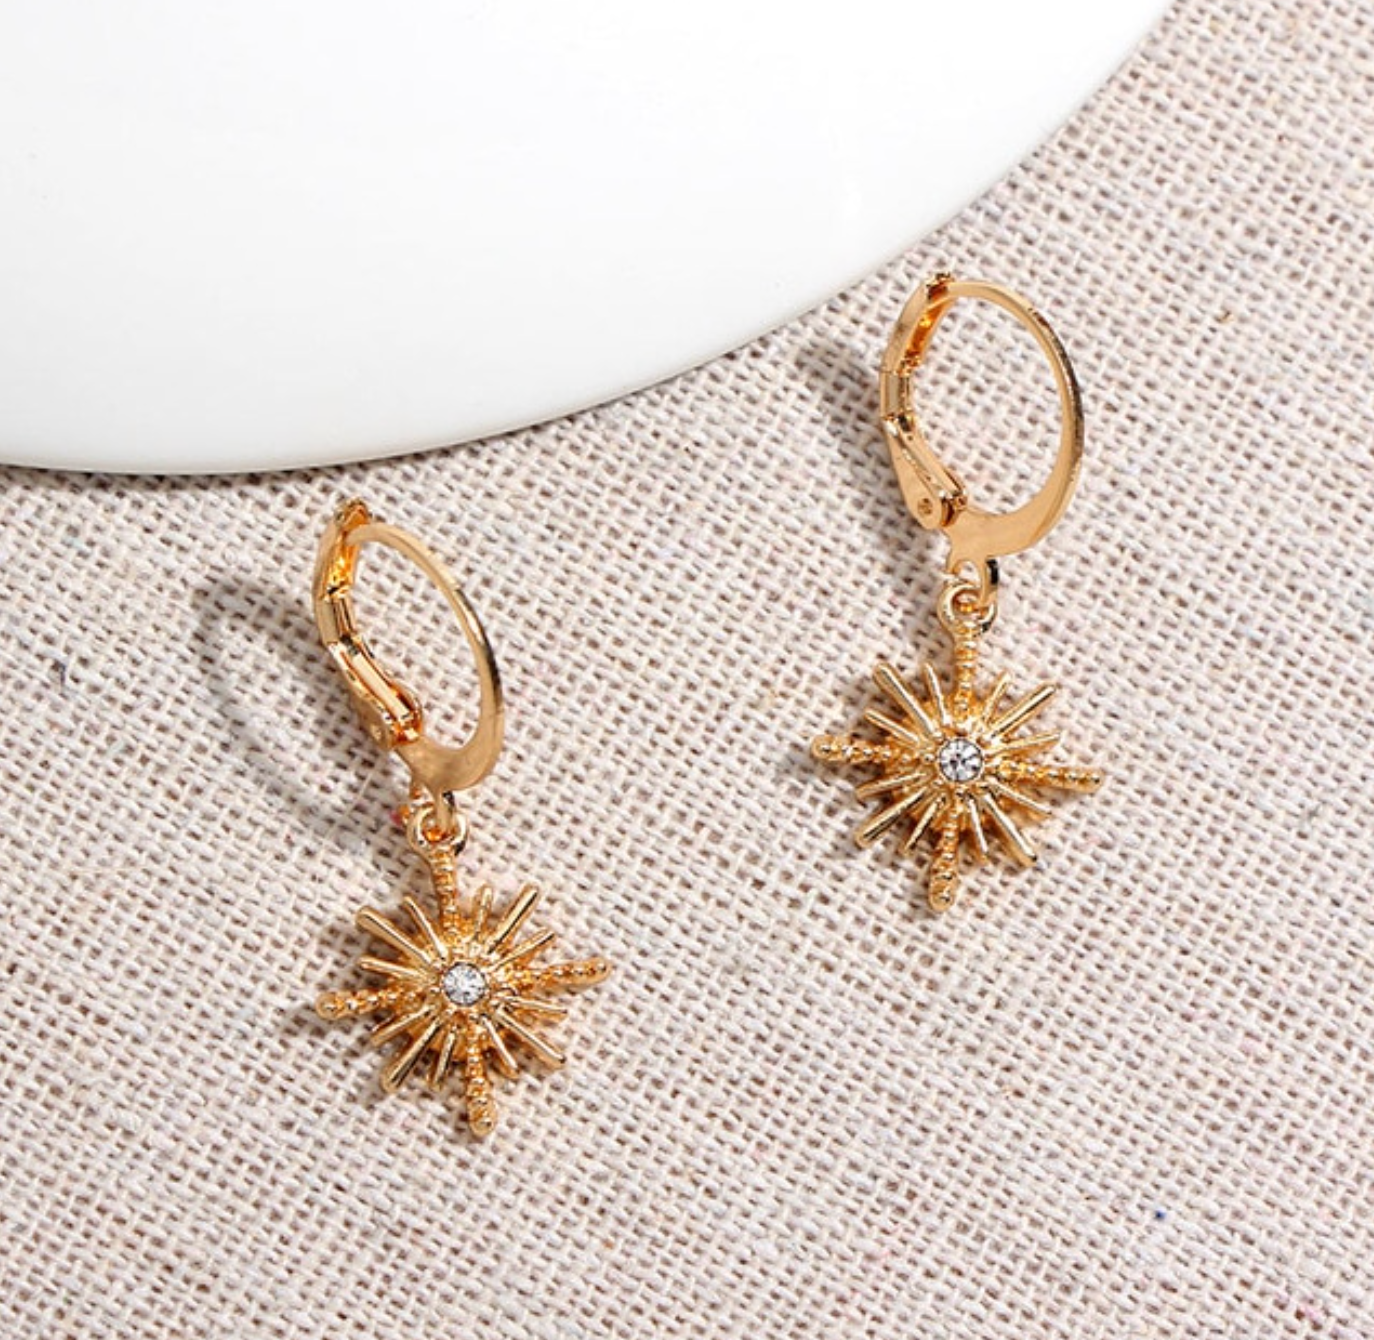 1 pair(2pcs), North Star Drop Earrings in Gold